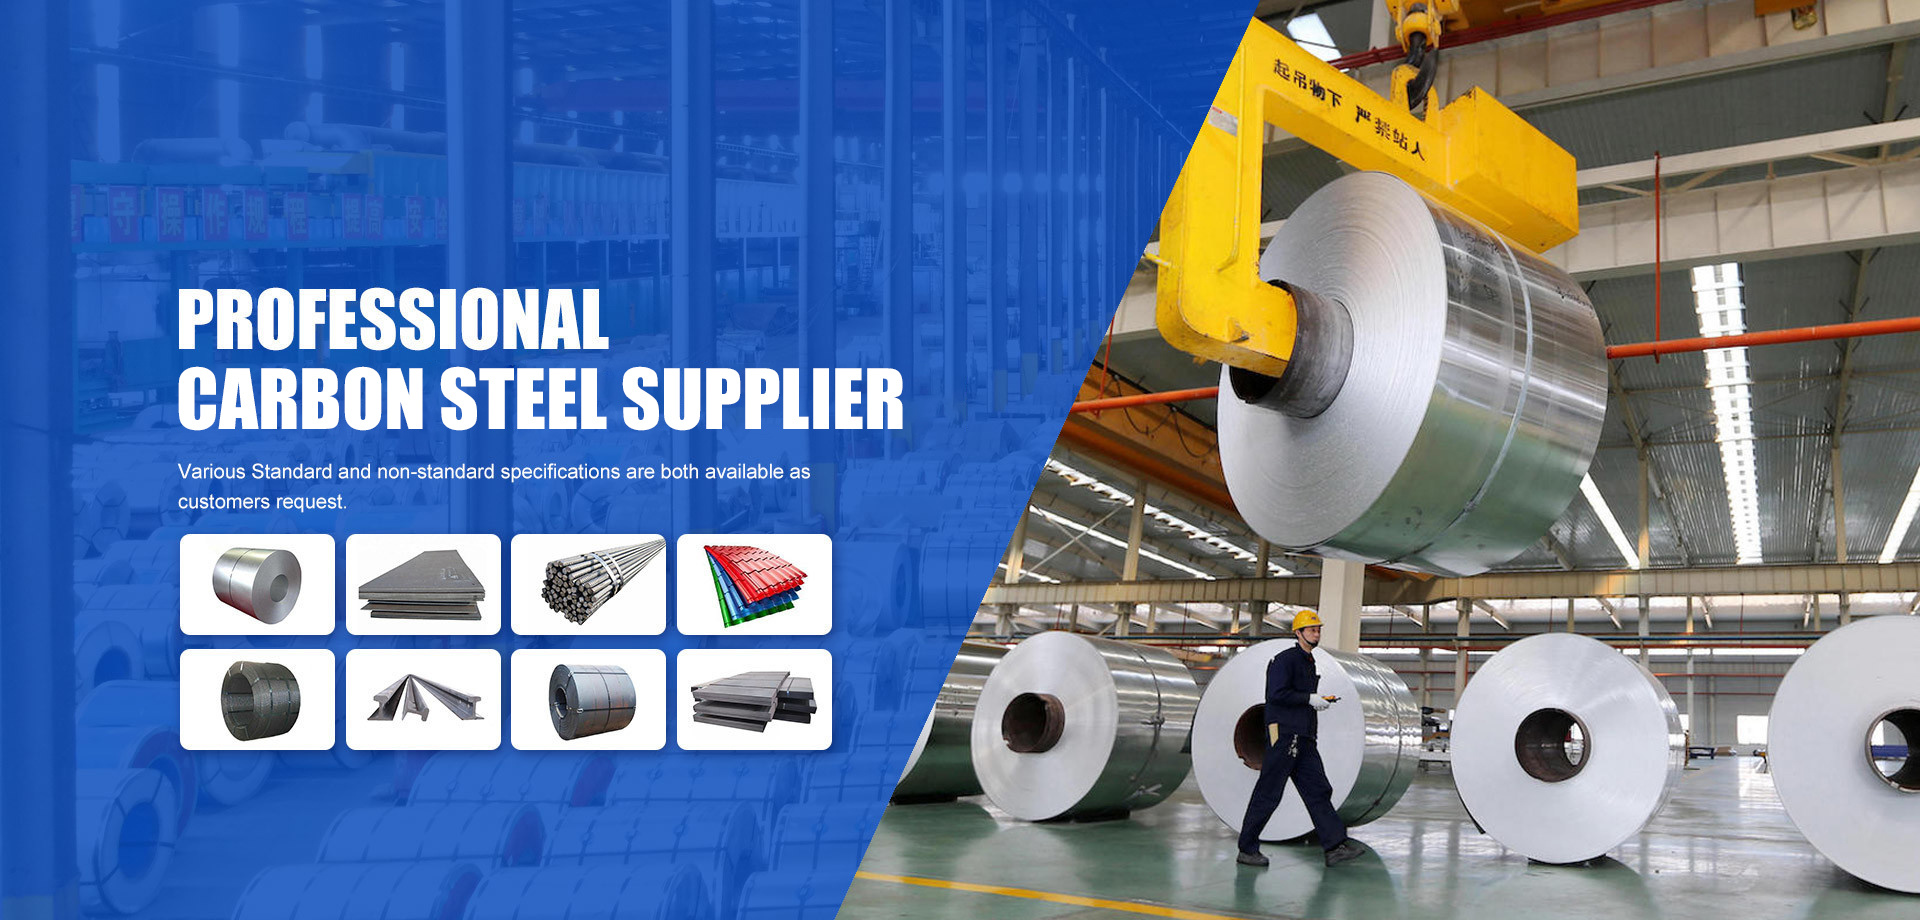 Zhangpu (Shandong) Iron and Steel Group Co., Ltd.